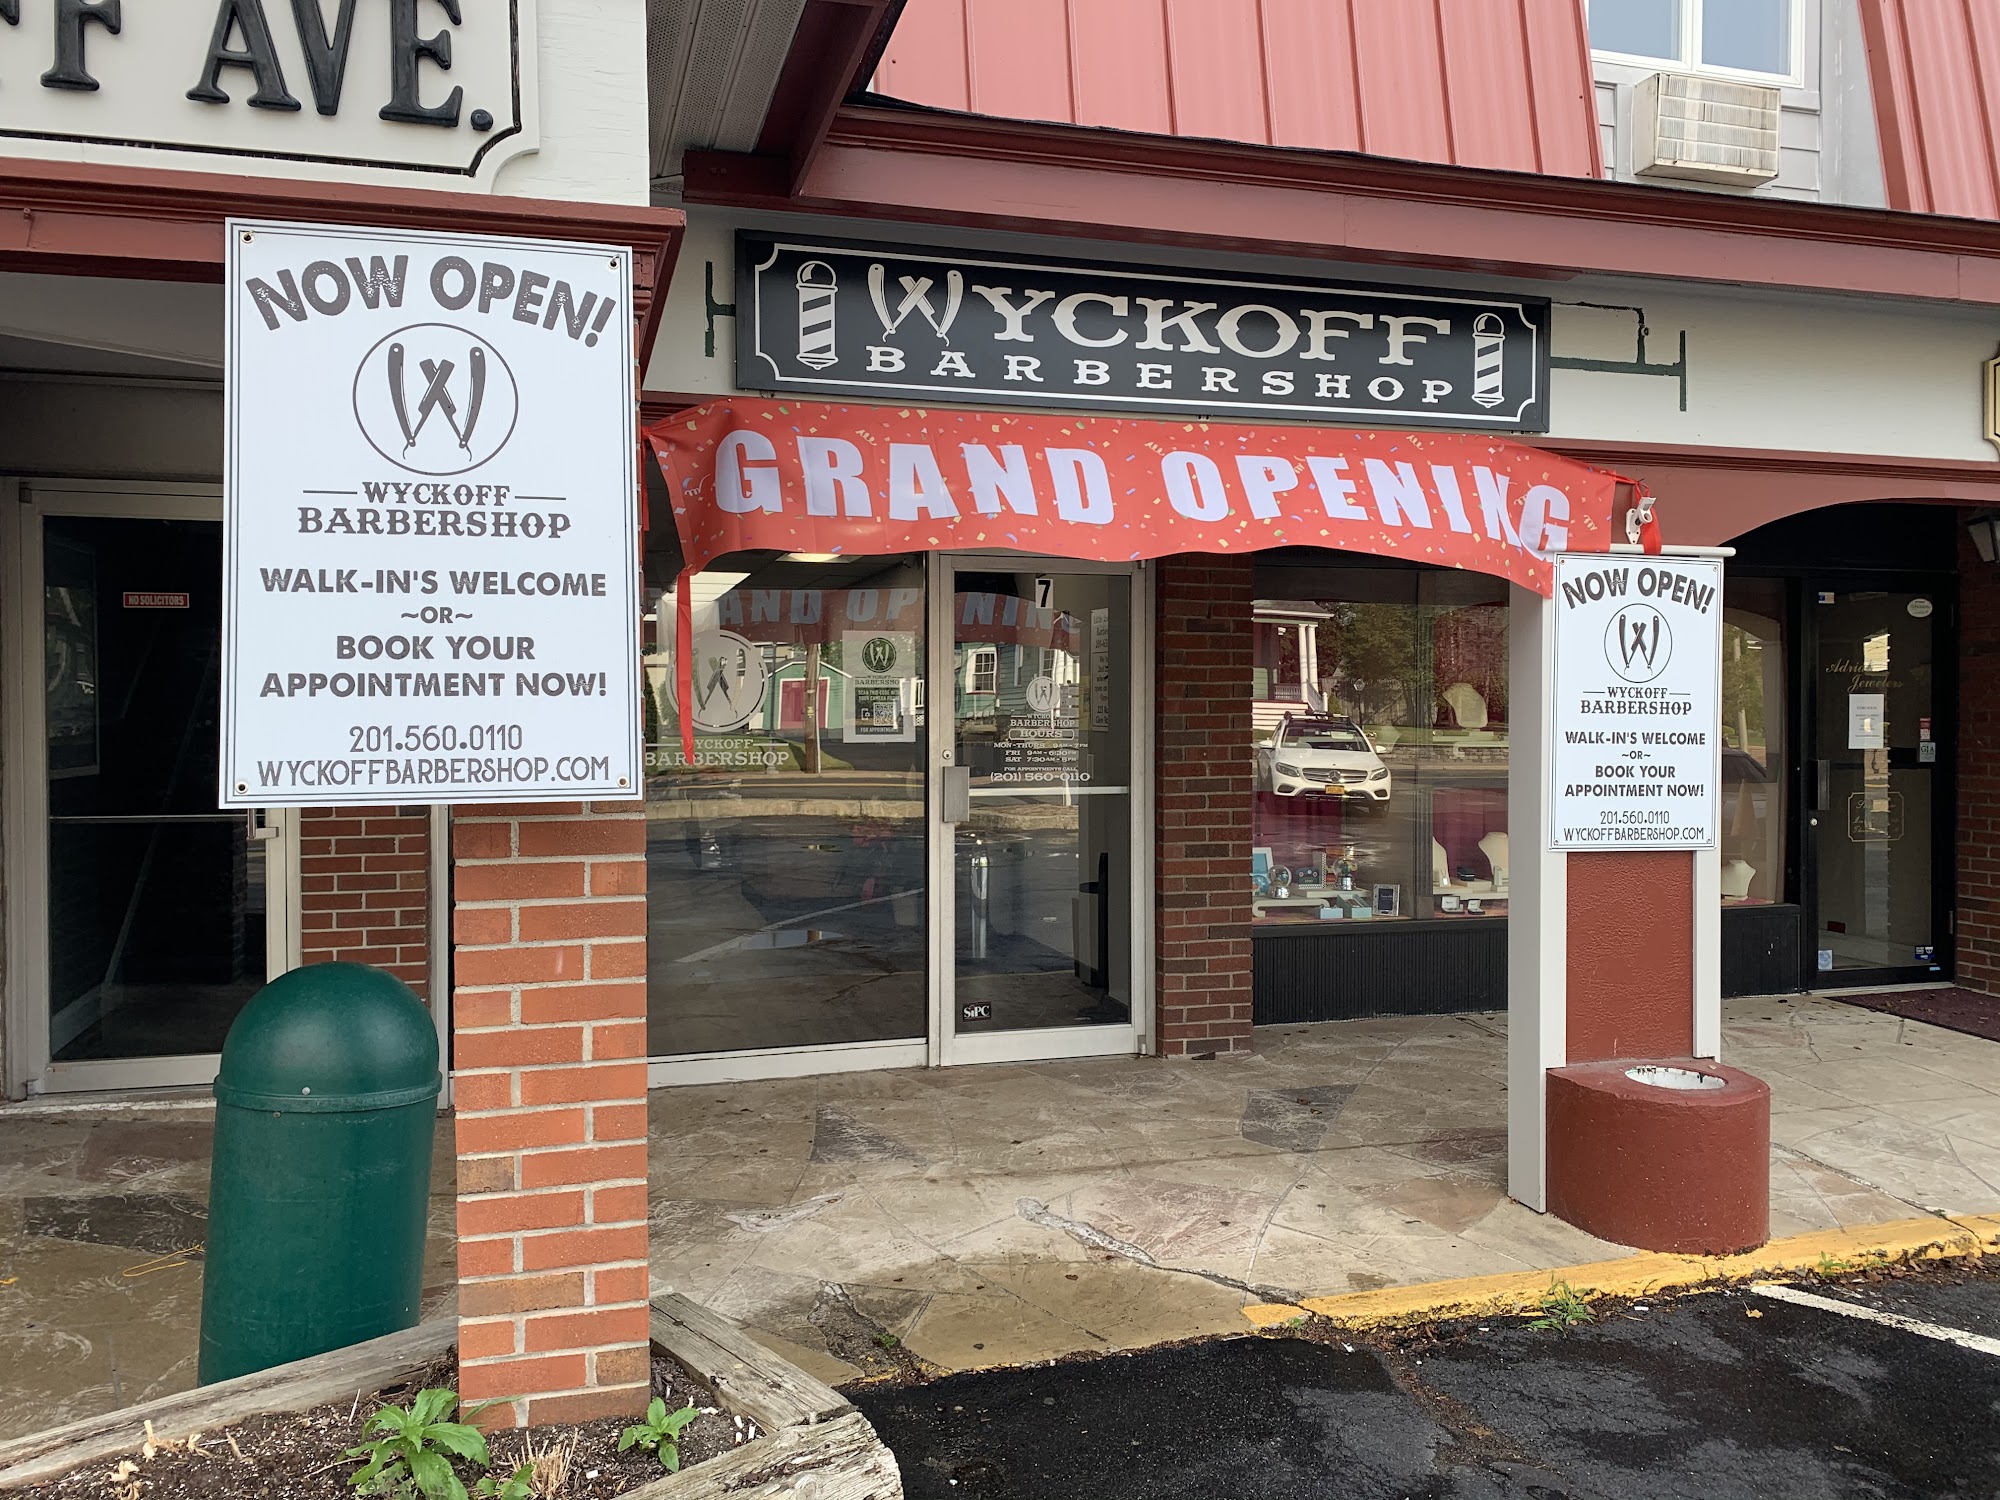 Wyckoff barbershop 637 Wyckoff Ave, Wyckoff New Jersey 07481